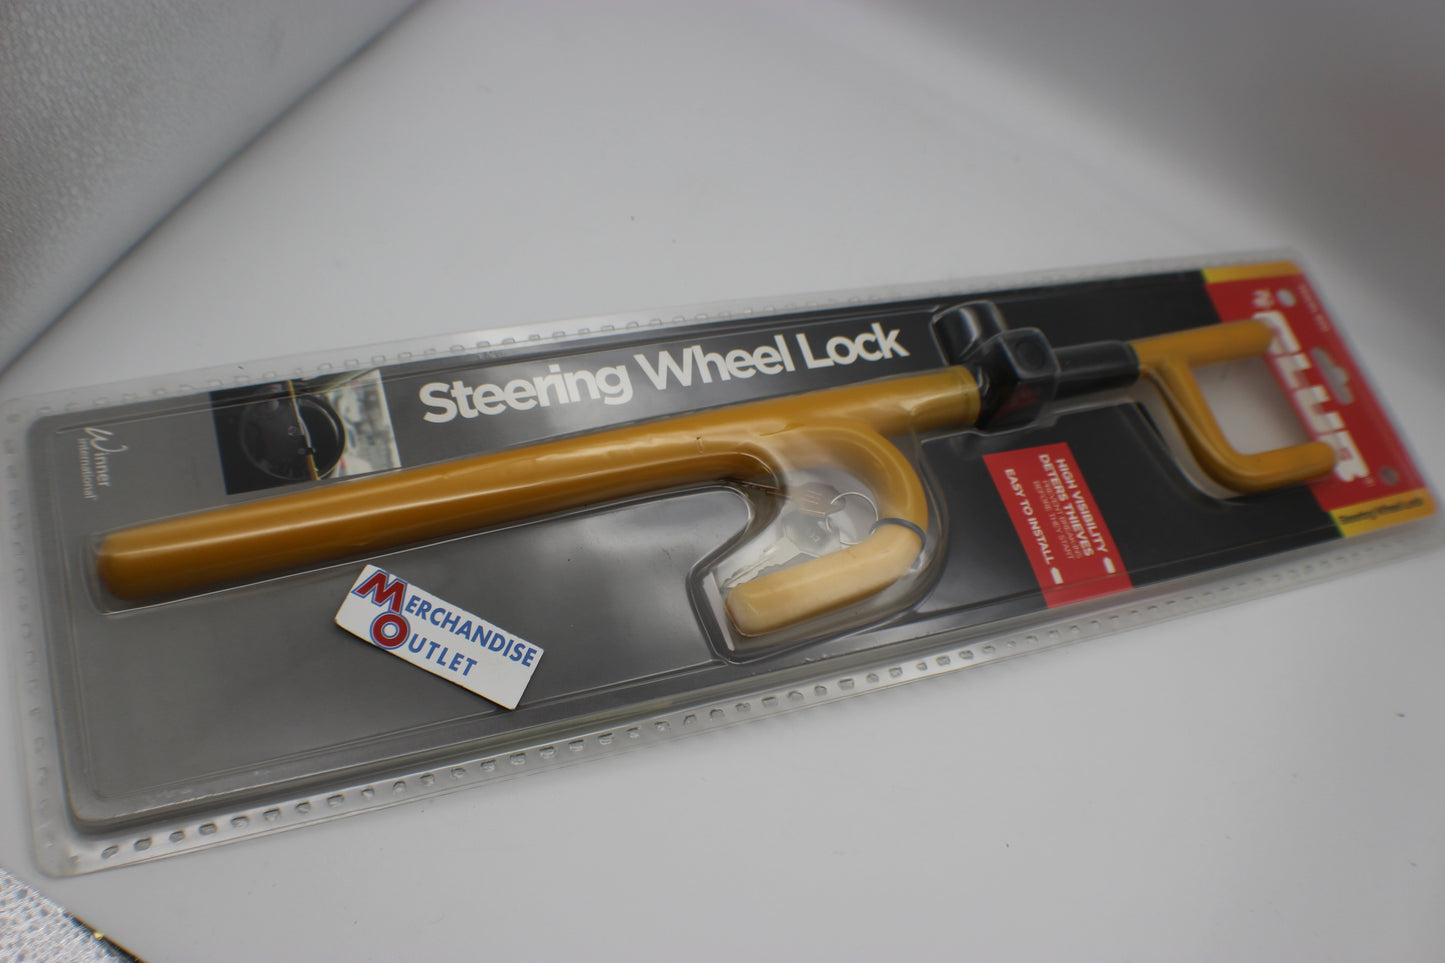 900 Steering Wheel Lock, Yellow